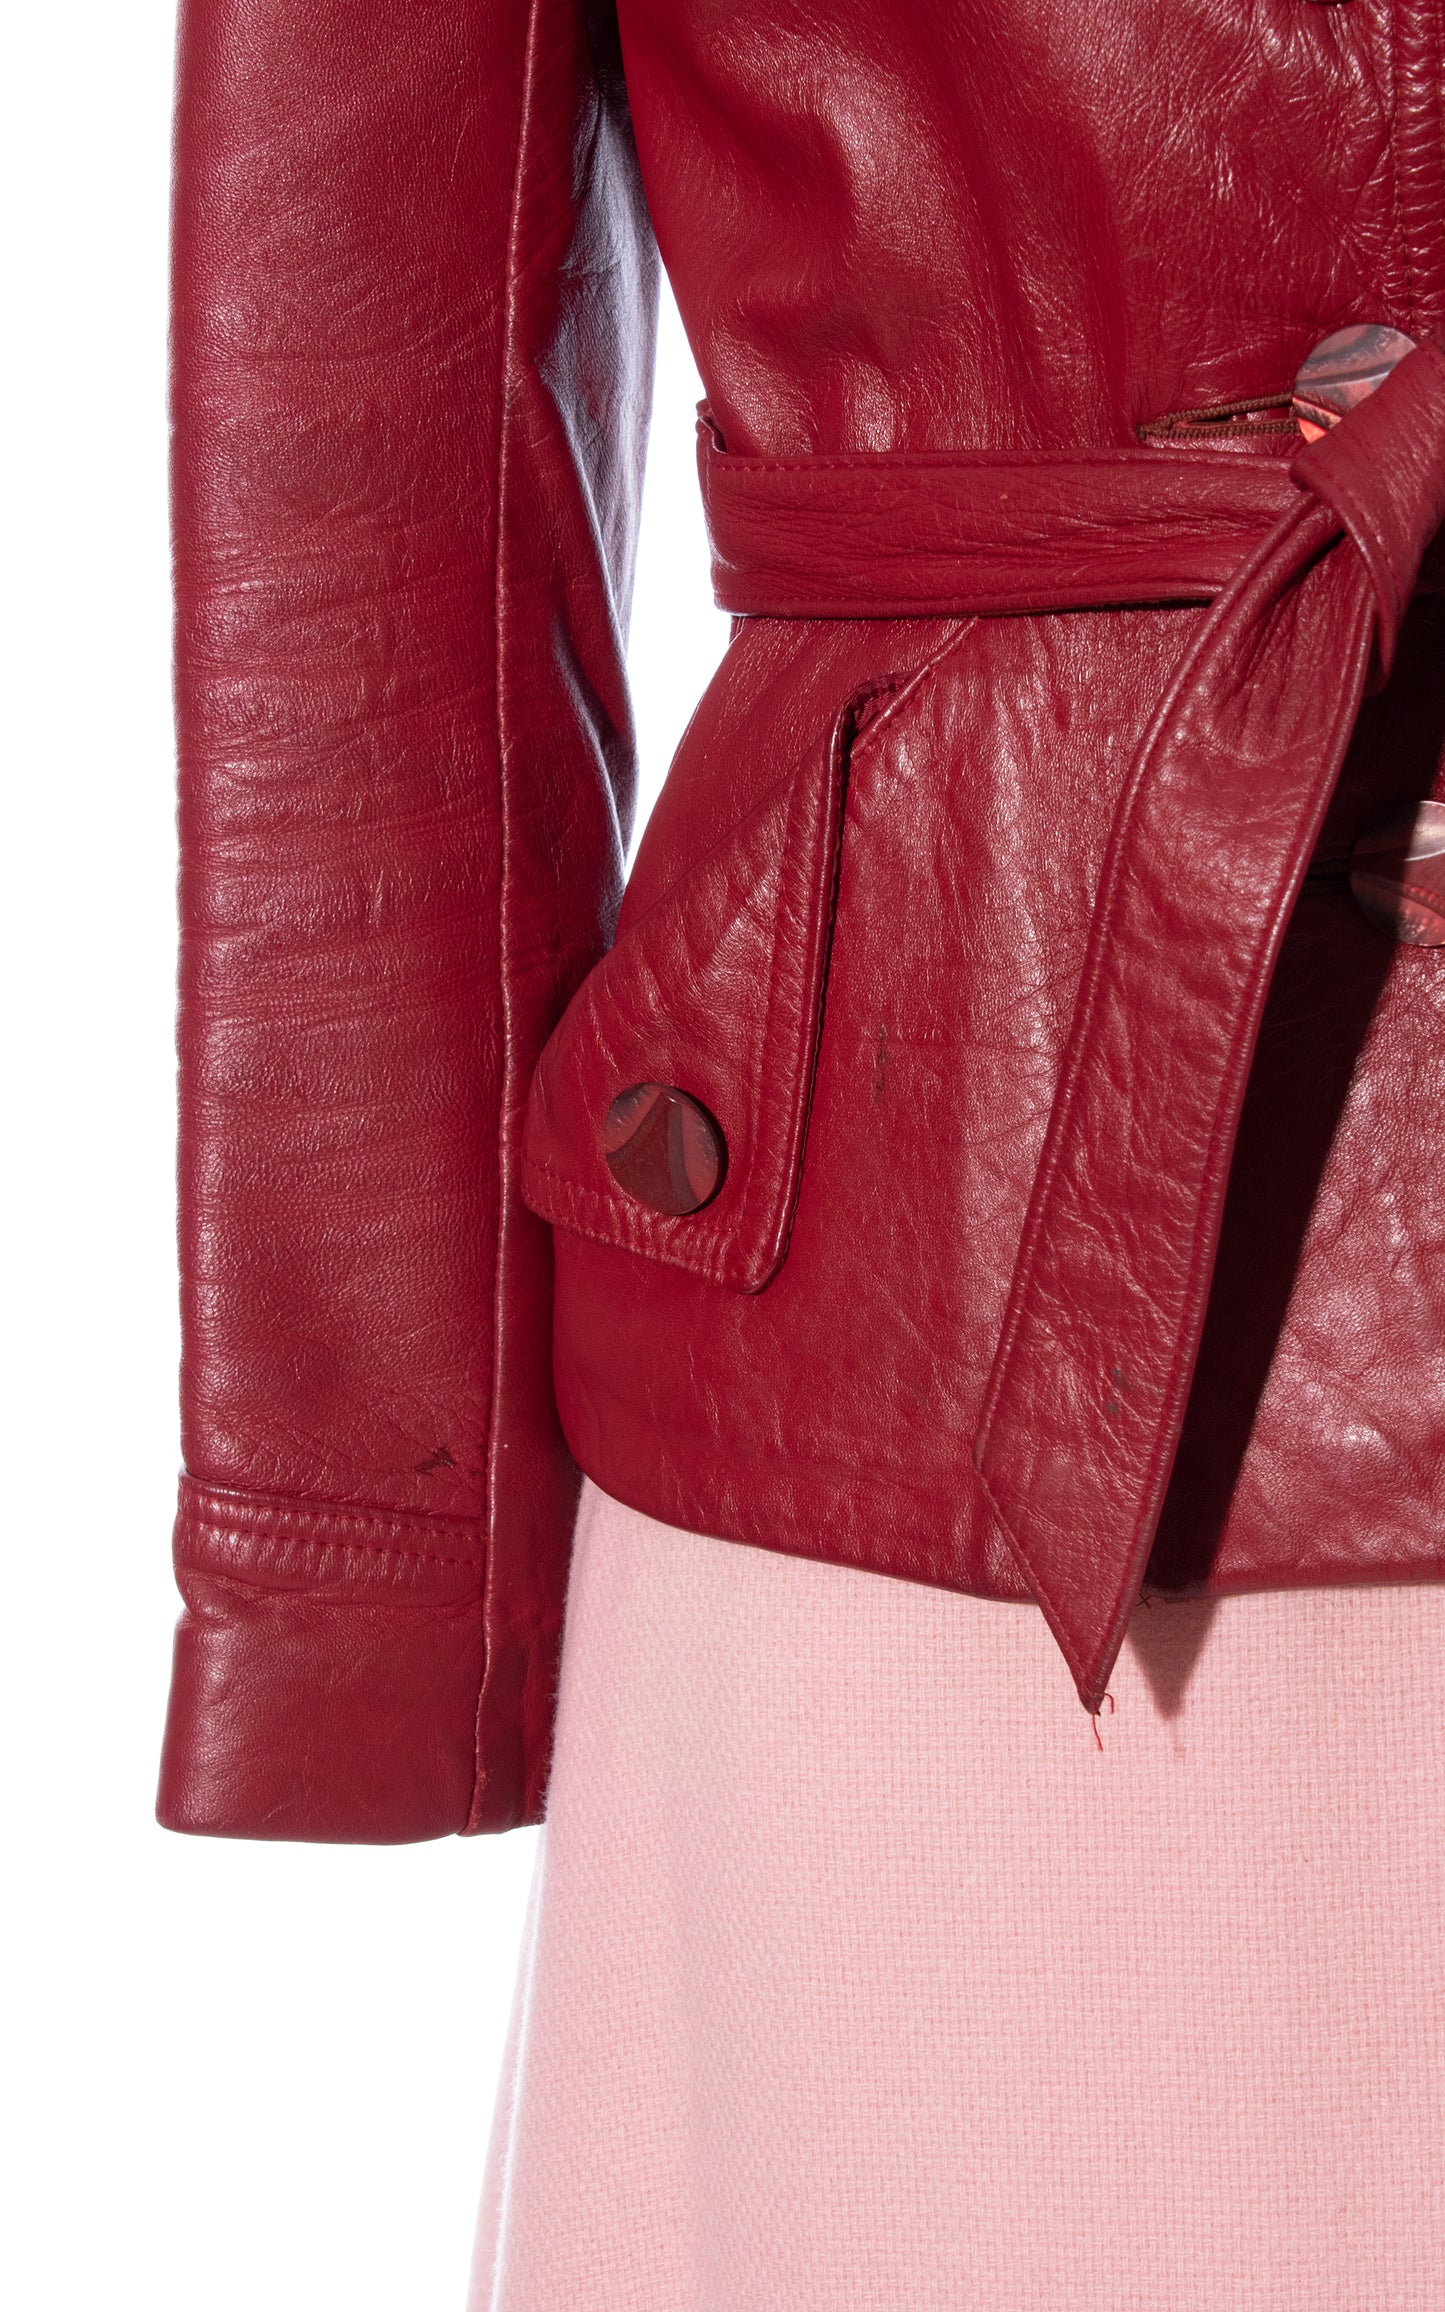 Vintage 70s 1970s Rustic Red Leather Boho Belted Jacket BirthdayLifeVintage